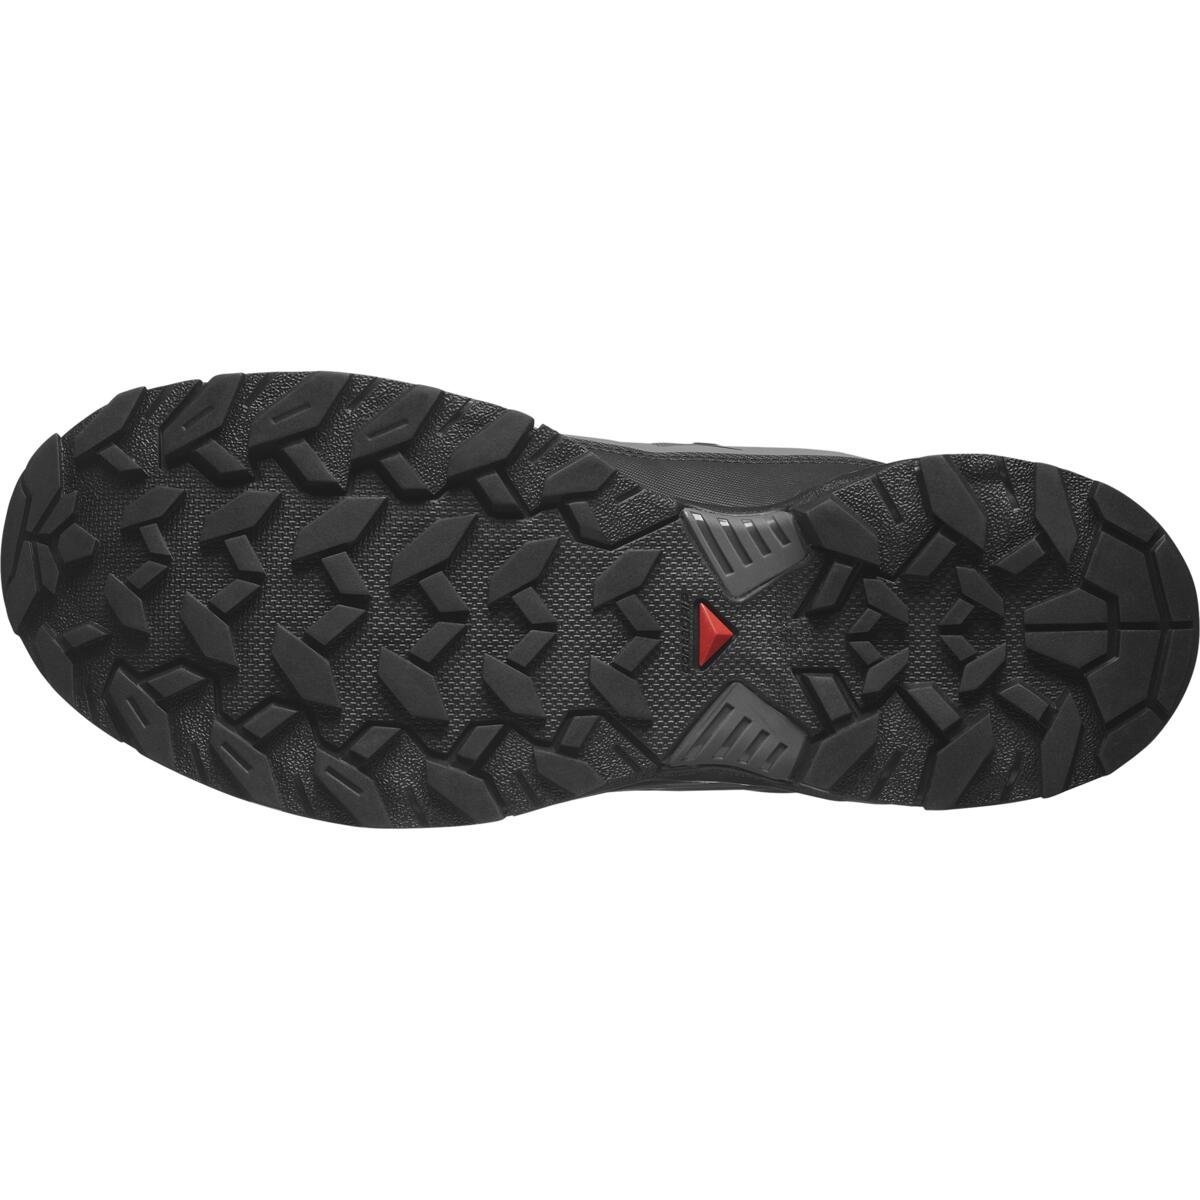 Topánky Salomon X Ultra 360 M - grey